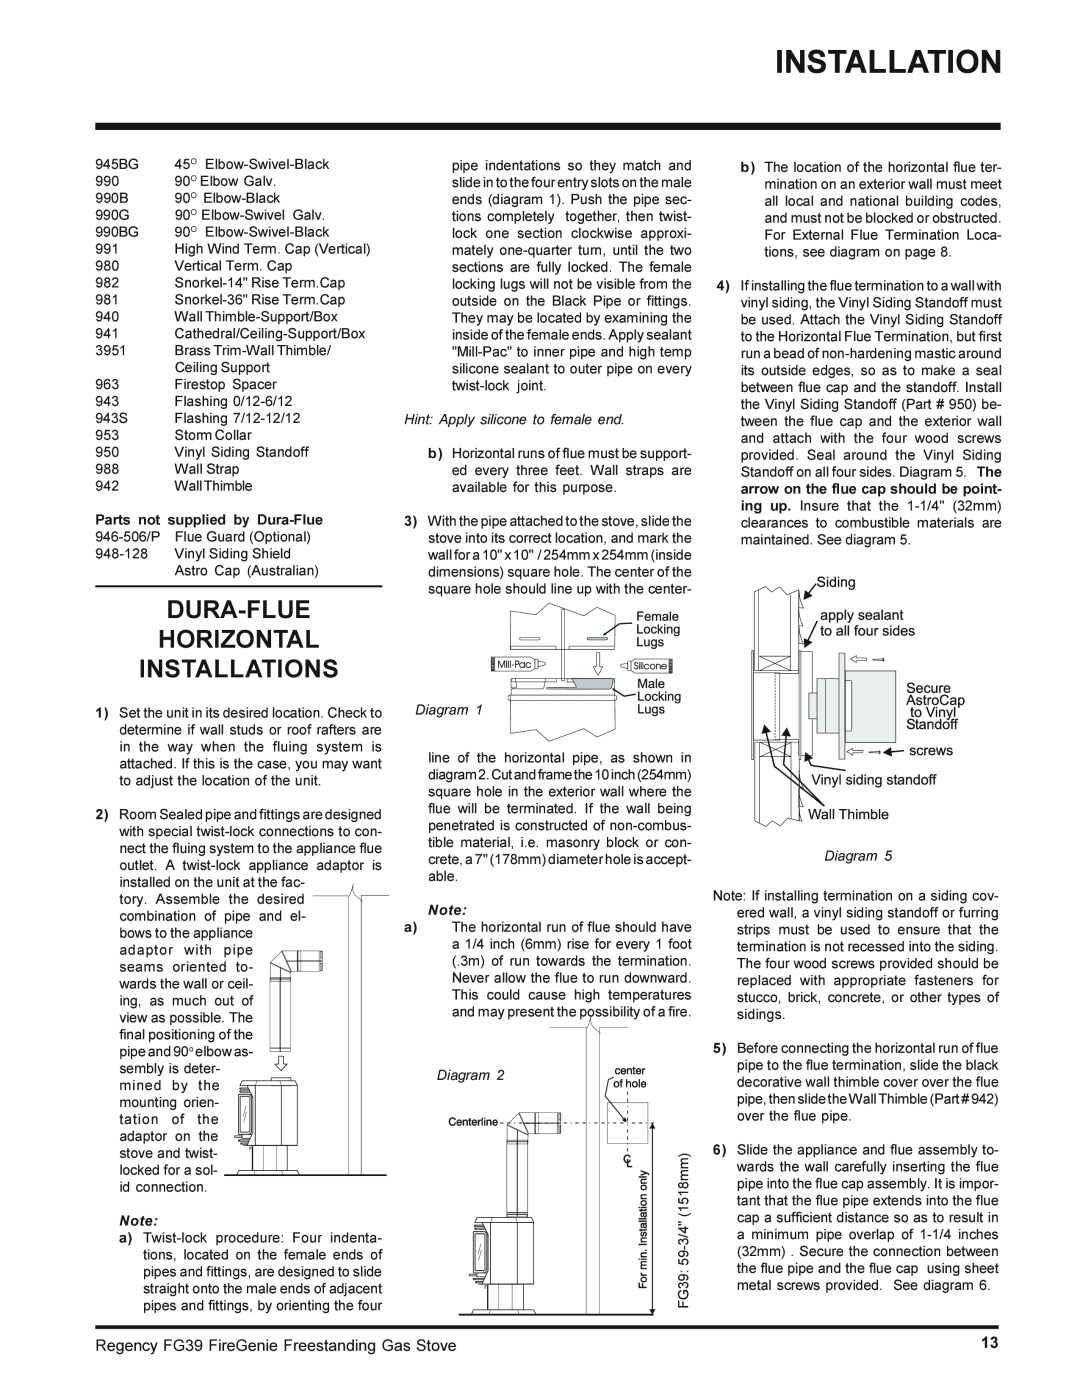 Regency FG39-NG, FG39-LPG installation manual Dura-Flue Horizontal Installations, Hint Apply silicone to female end, Diagram 